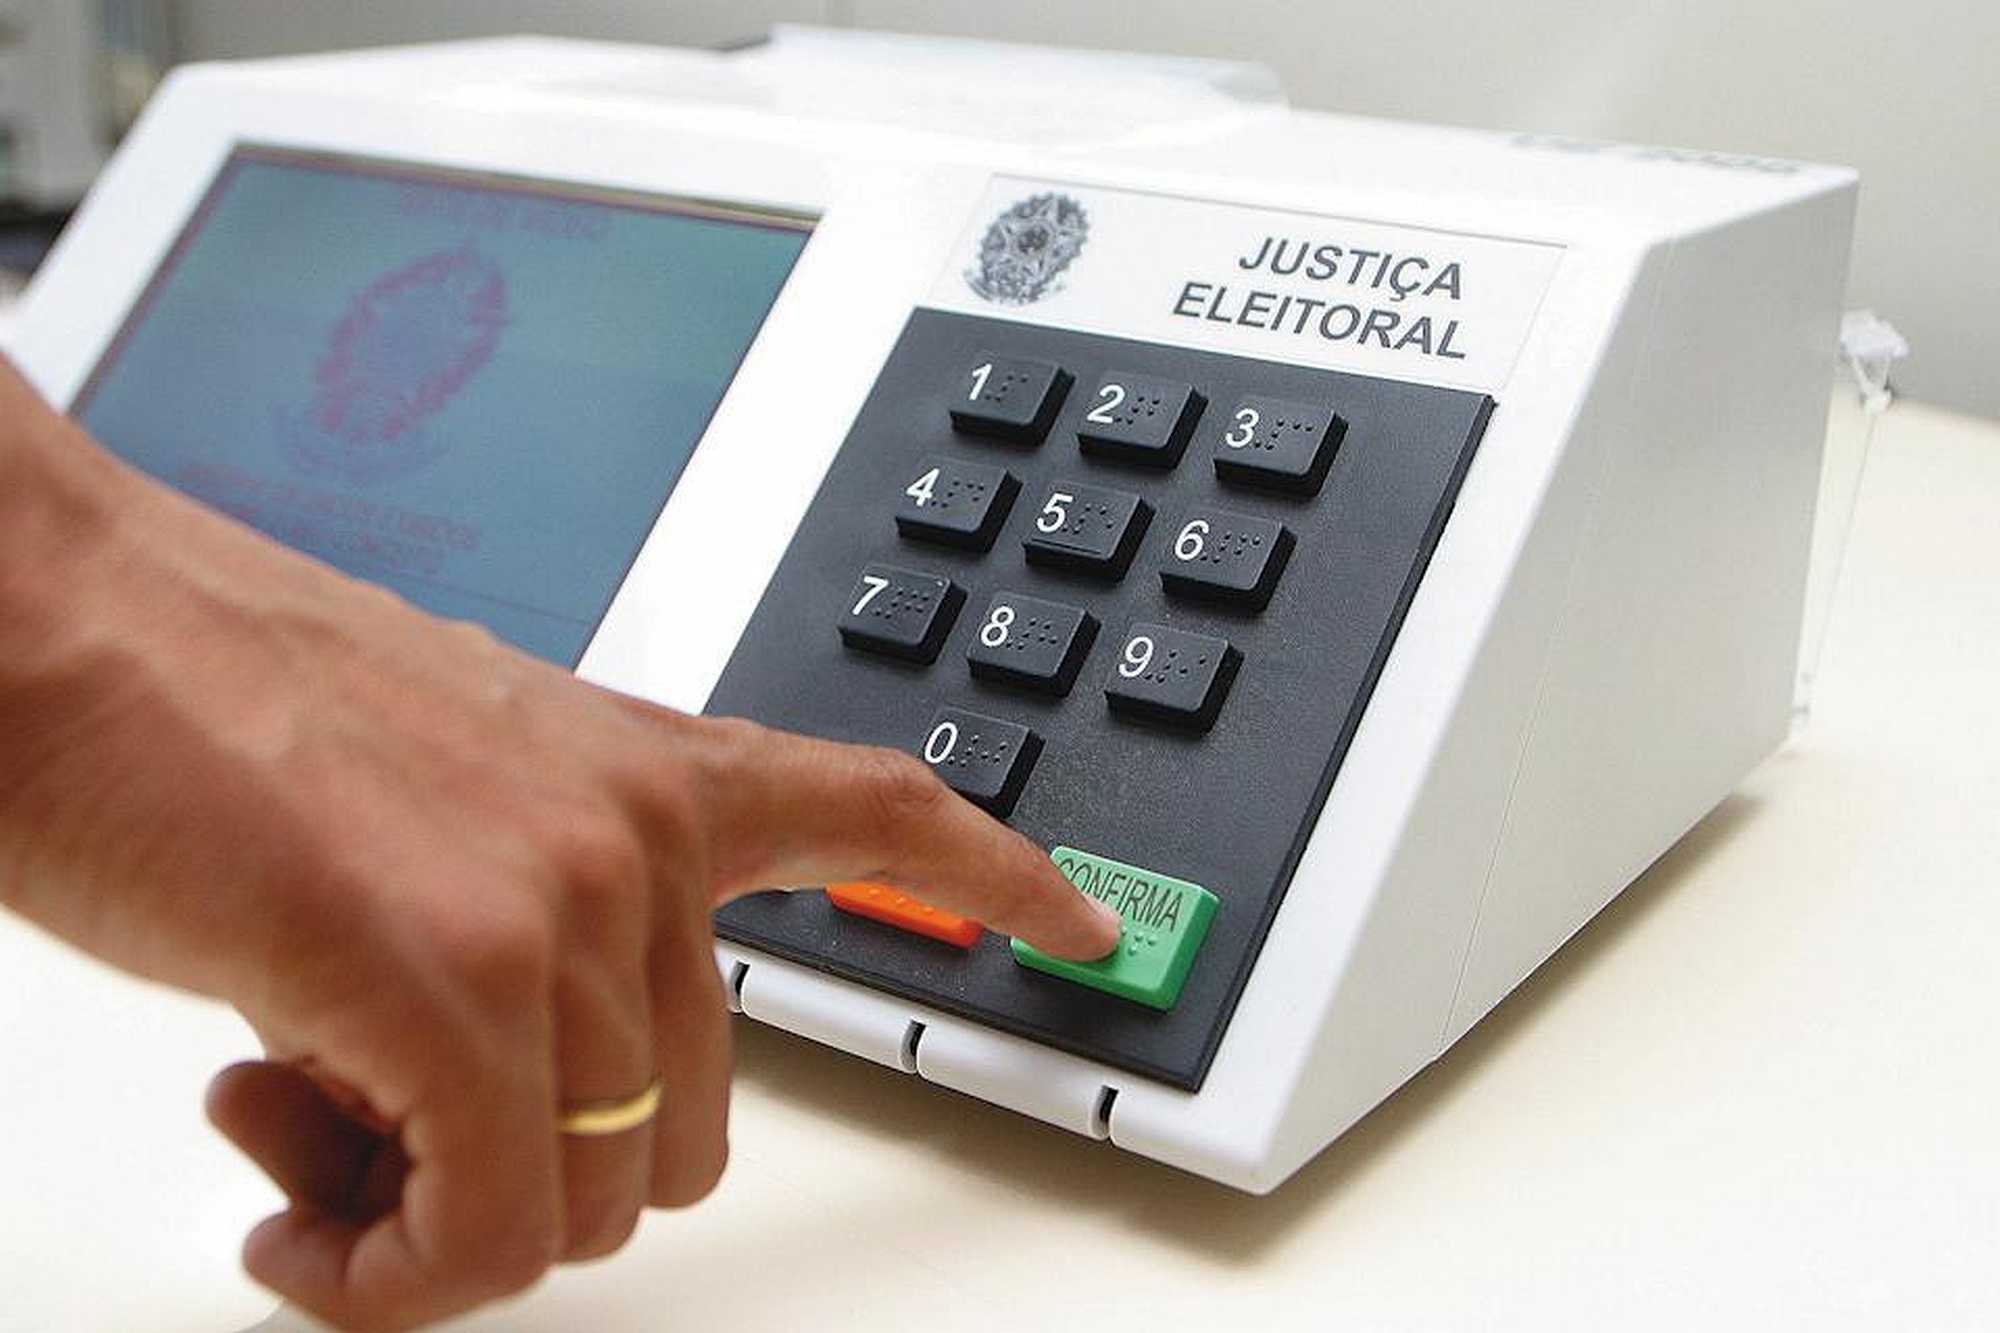 Brazilian electronic ballot.